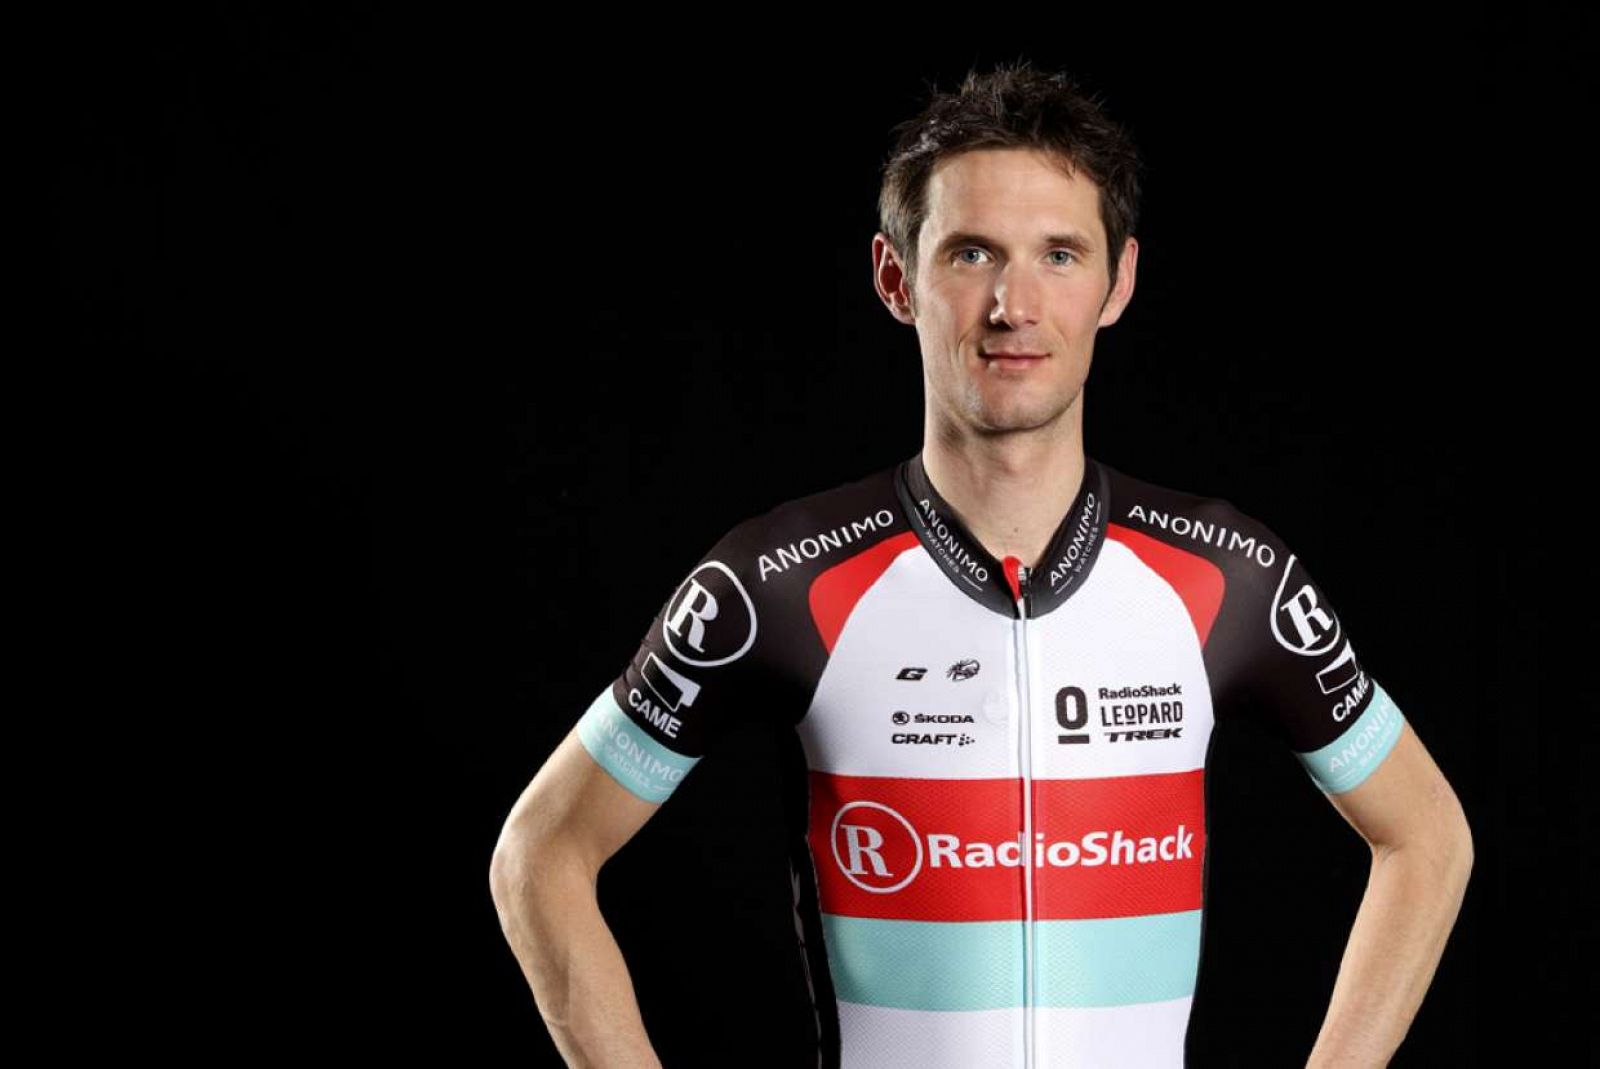 Frank Schleck, ciclista del equipo luxemburgués RadioShack Leopard